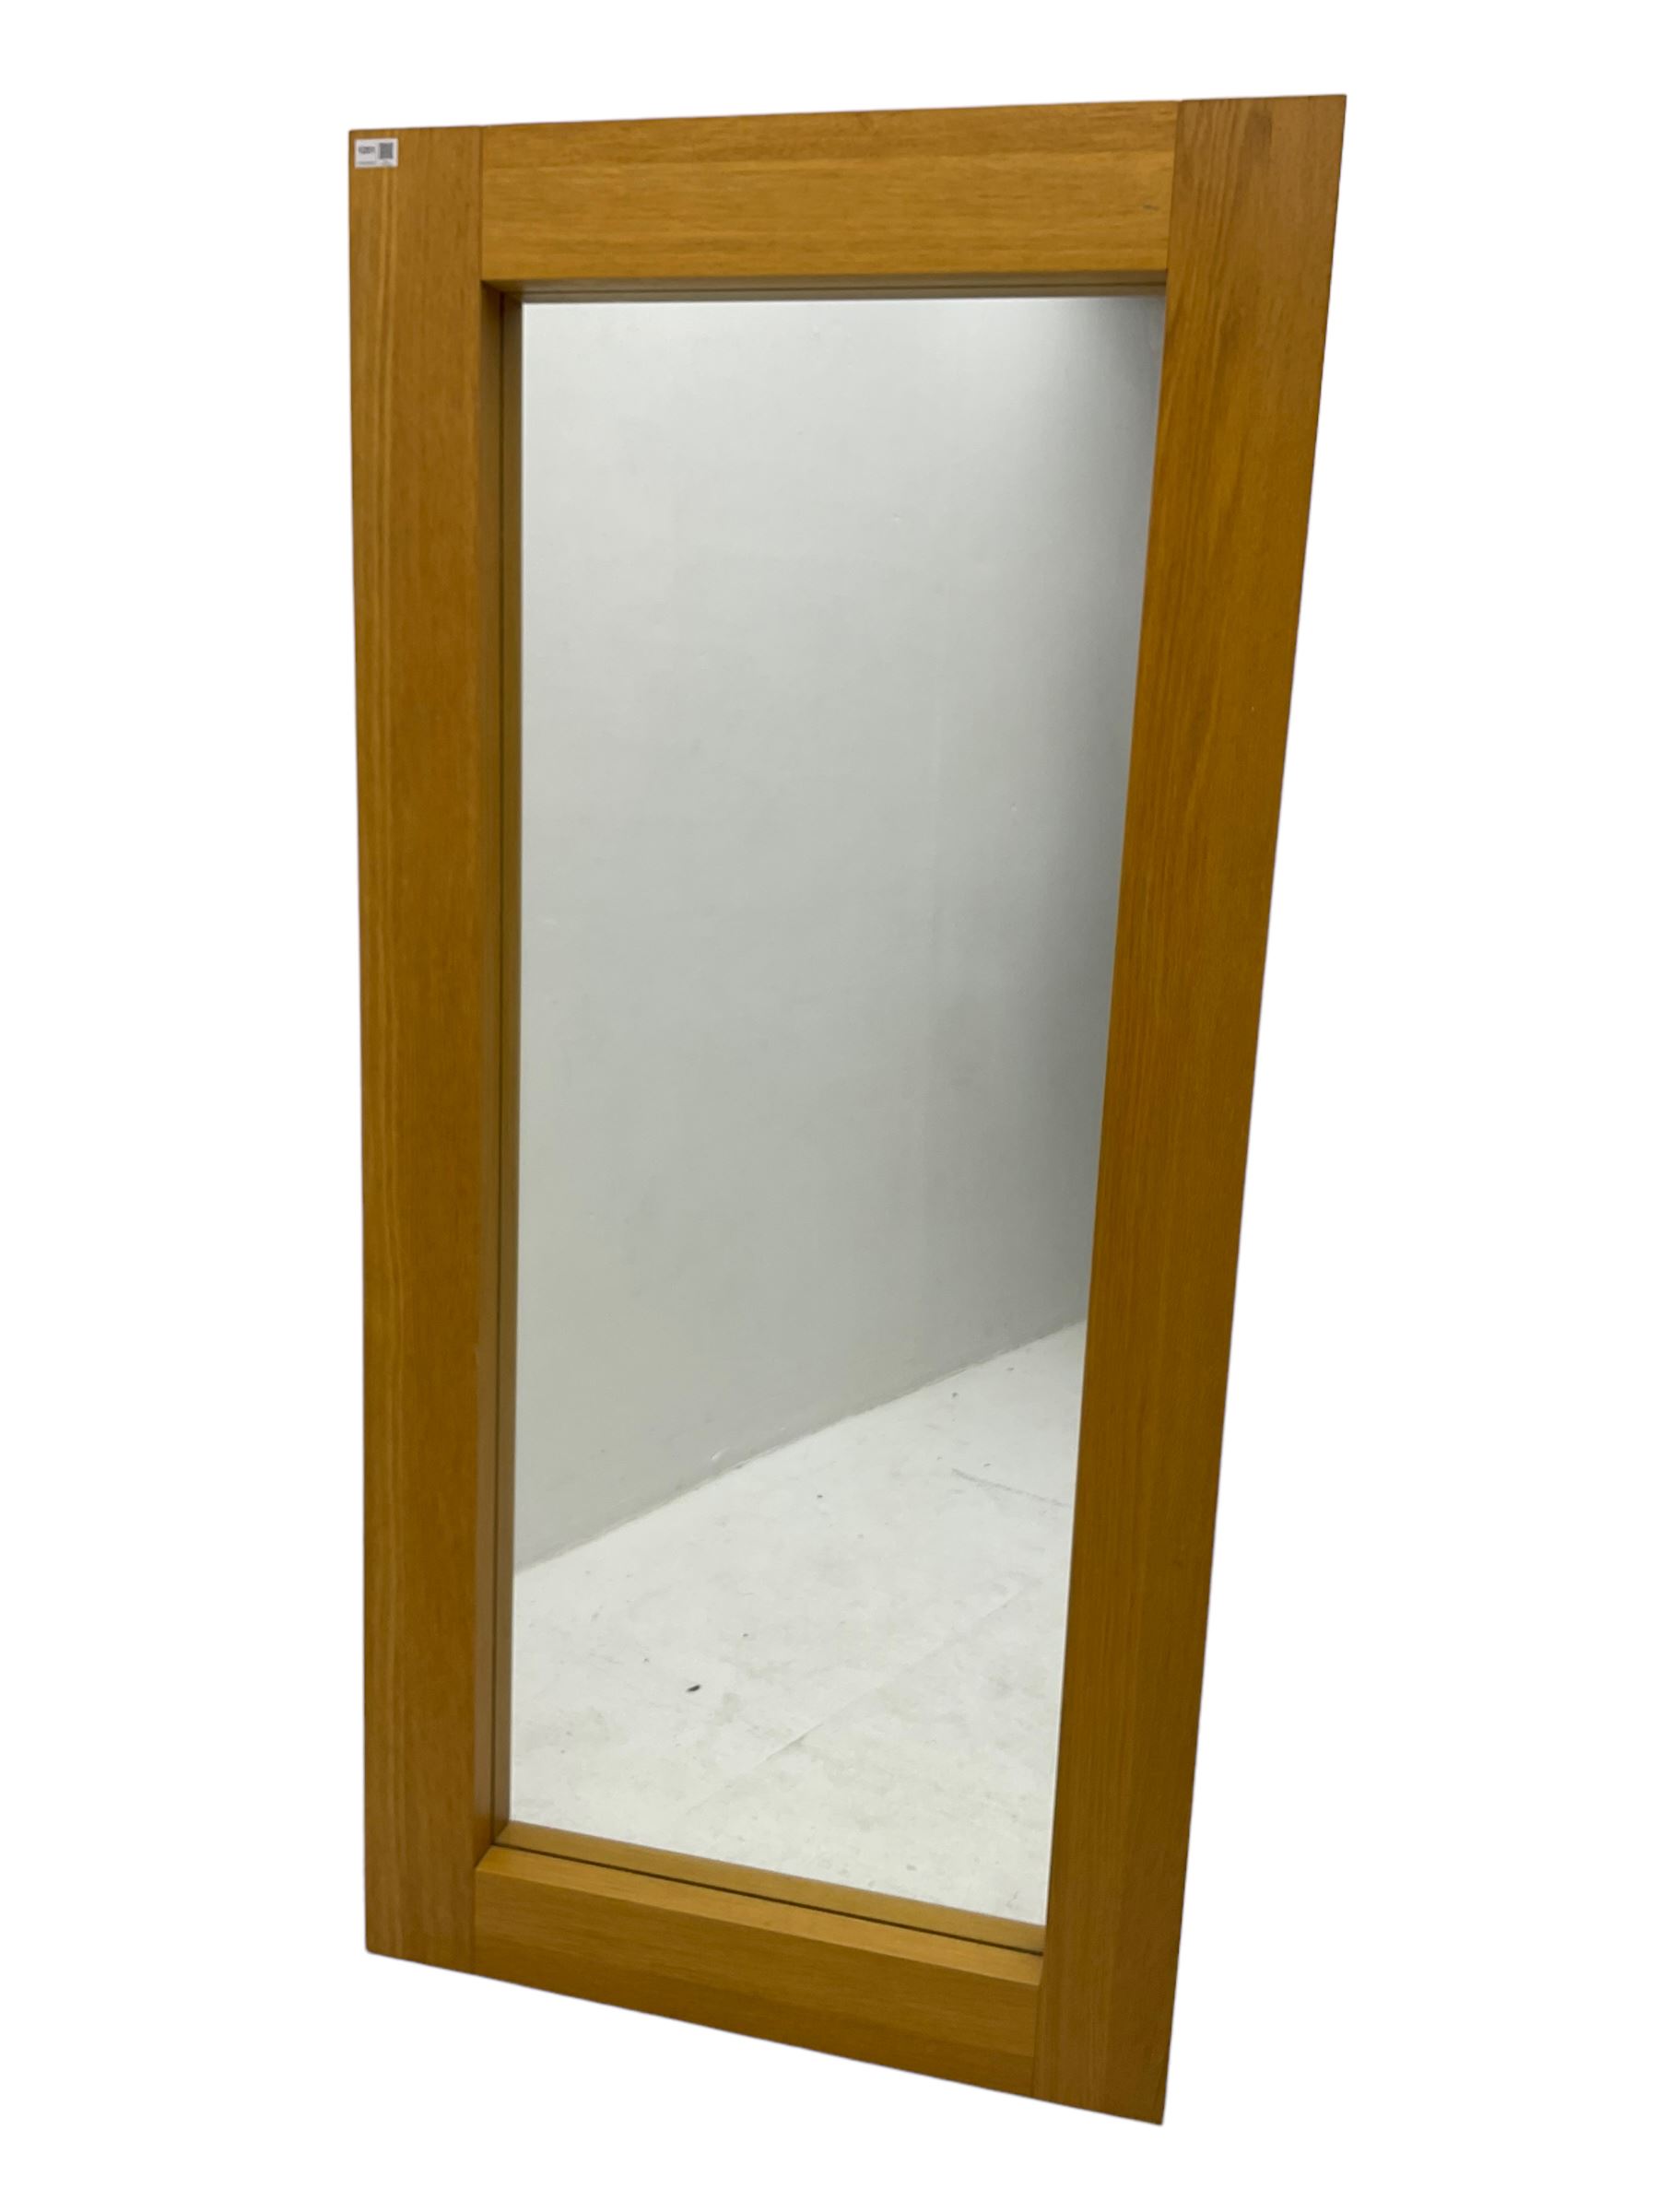 Contemporary oak framed mirror - Image 5 of 10